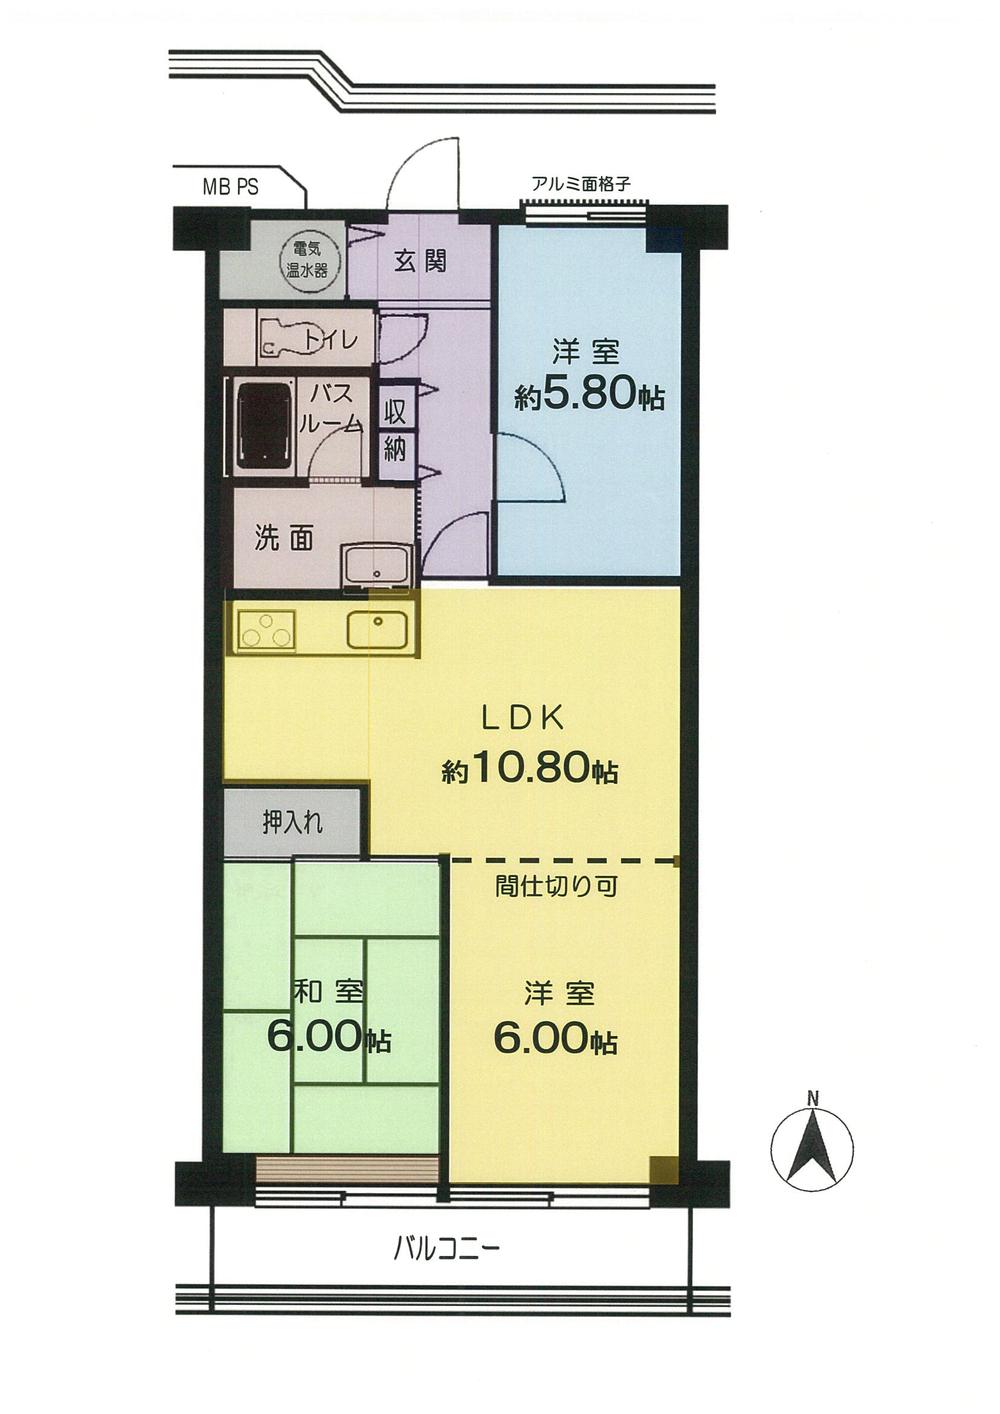 Floor plan. 3LDK, Price 13.8 million yen, Footprint 64.4 sq m , Floor plan of the balcony area 6.72 sq m south-facing